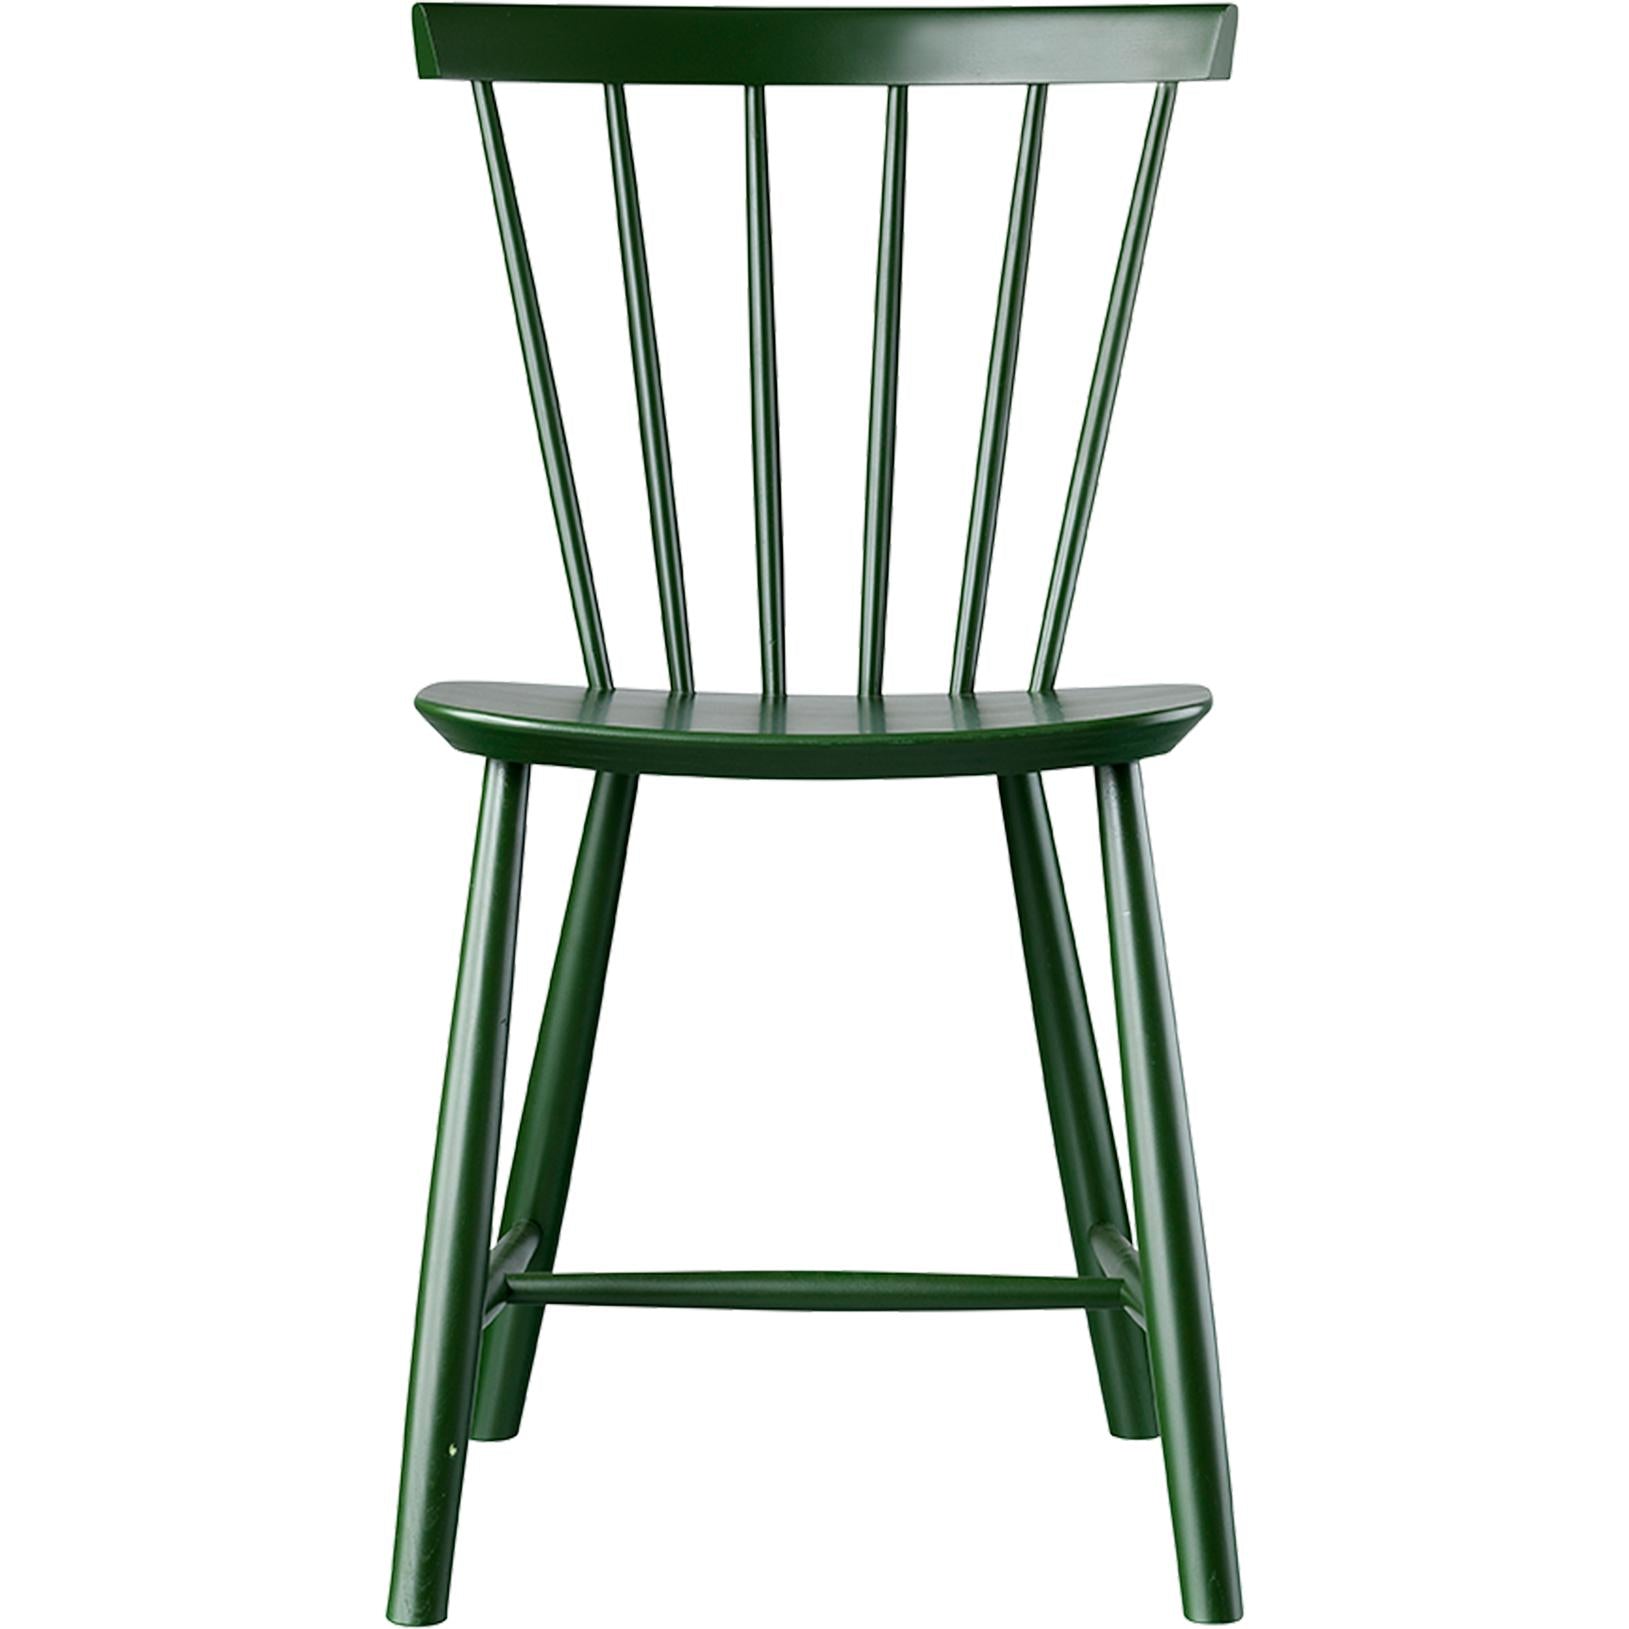 Fdb Møbler Poul Volther J46 Dining Chair Beech, Bottle Green, H 80cm